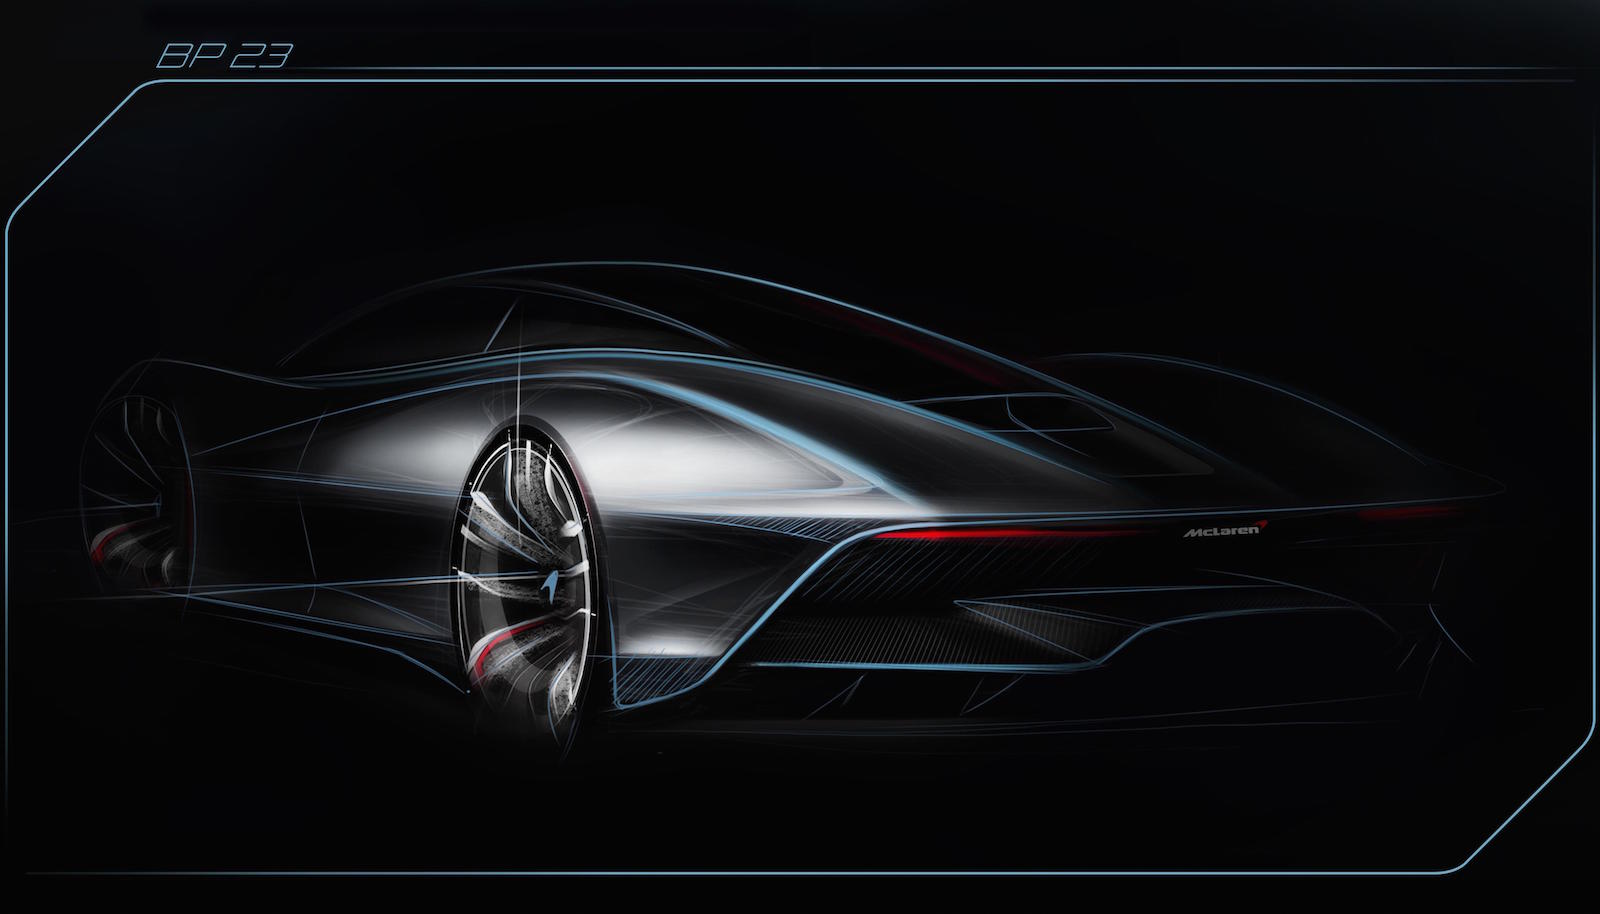 McLaren previews ‘Hyper-GT’ BP23 model, F1 successor